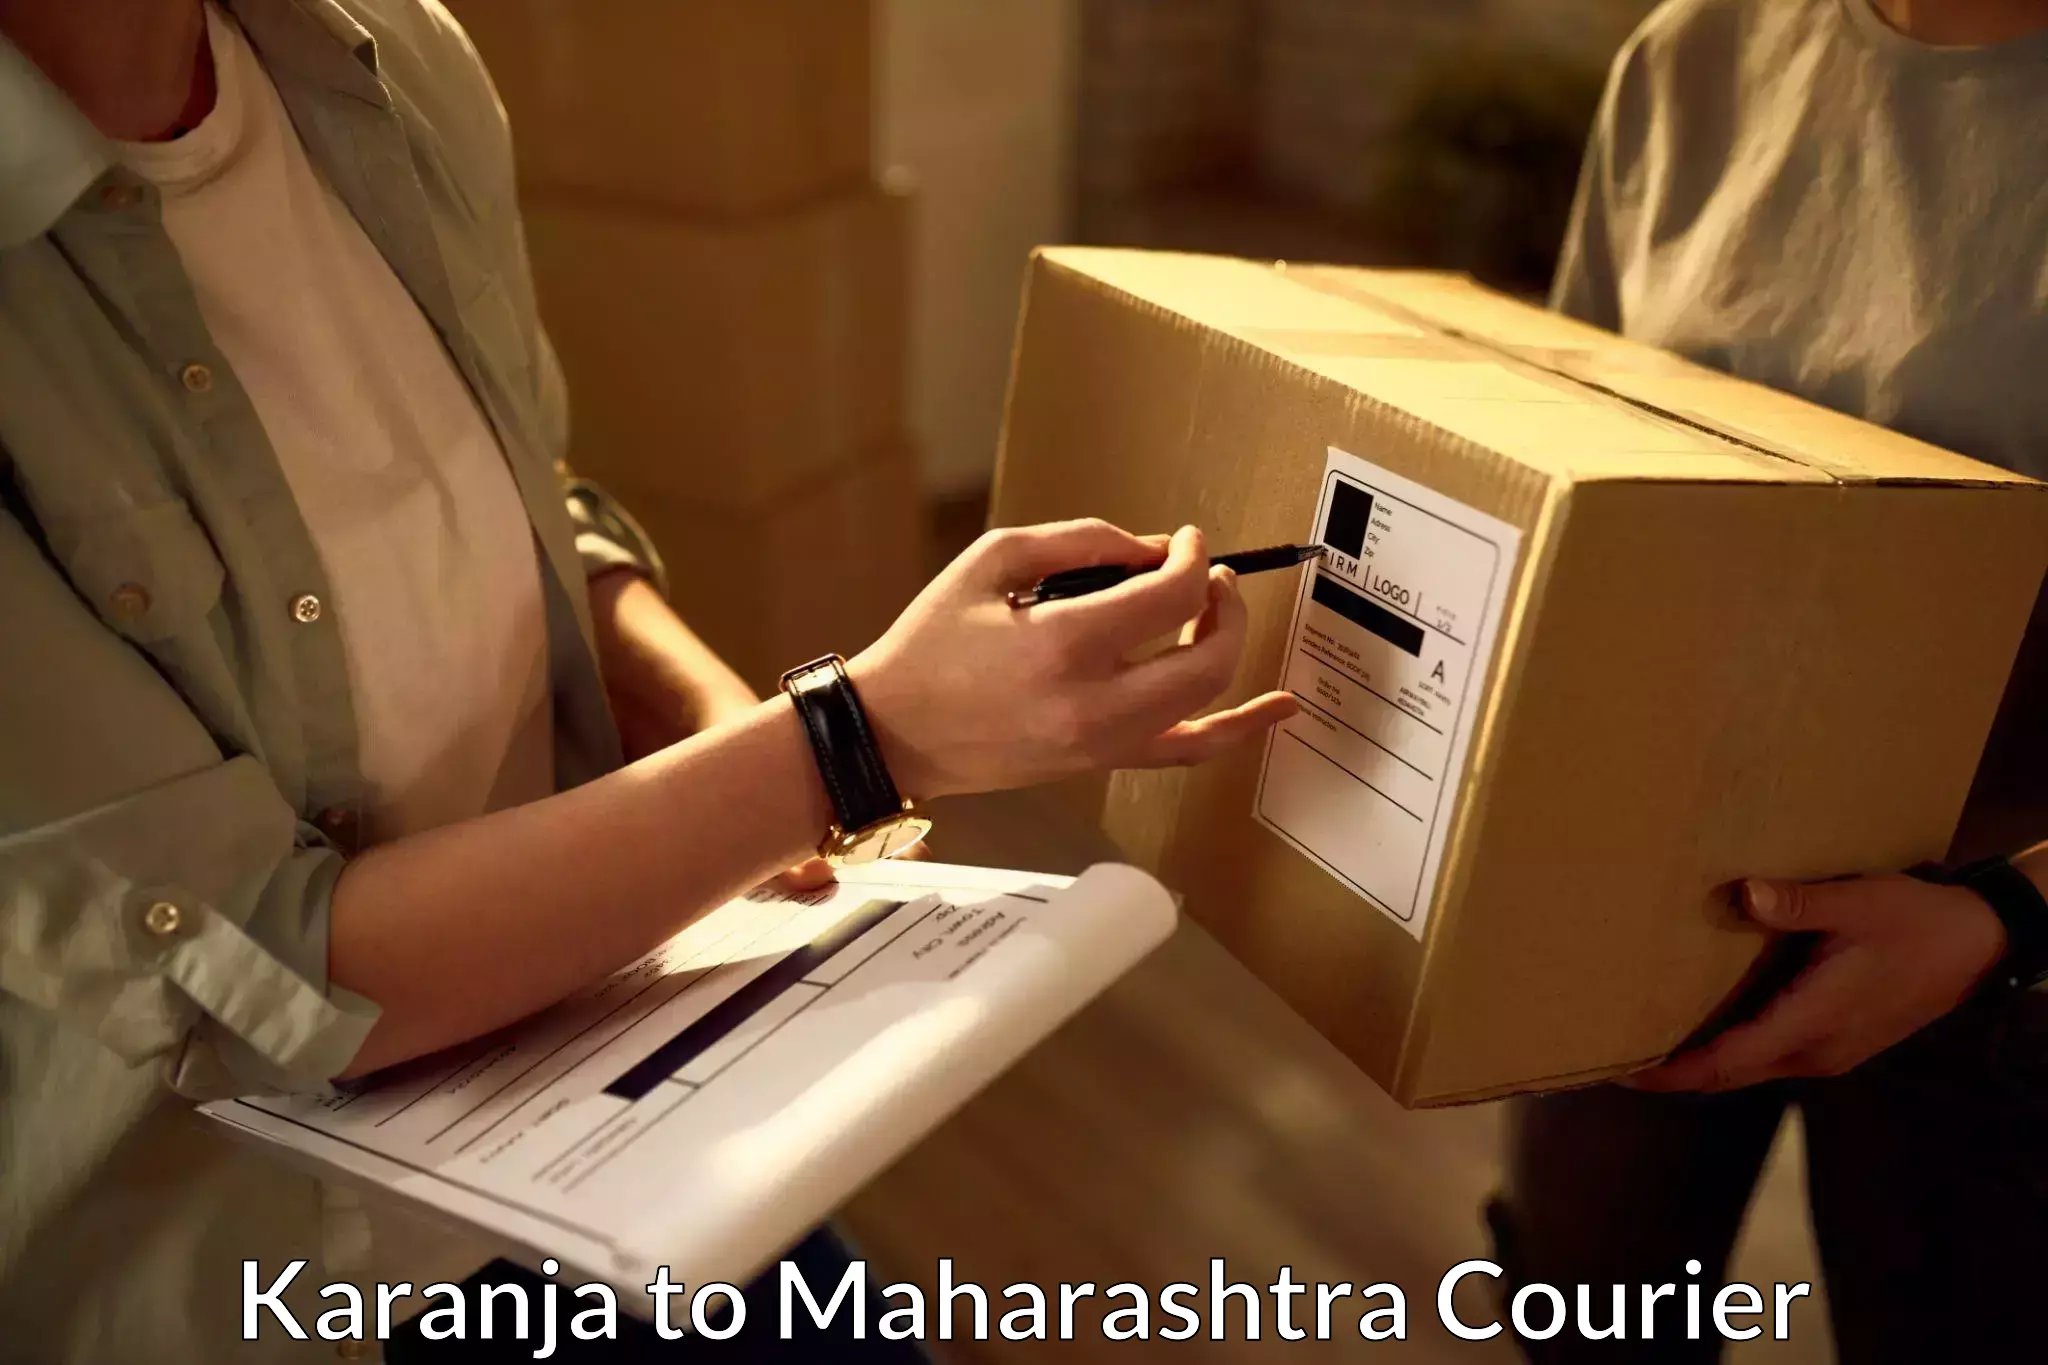 Professional courier handling Karanja to Vairag